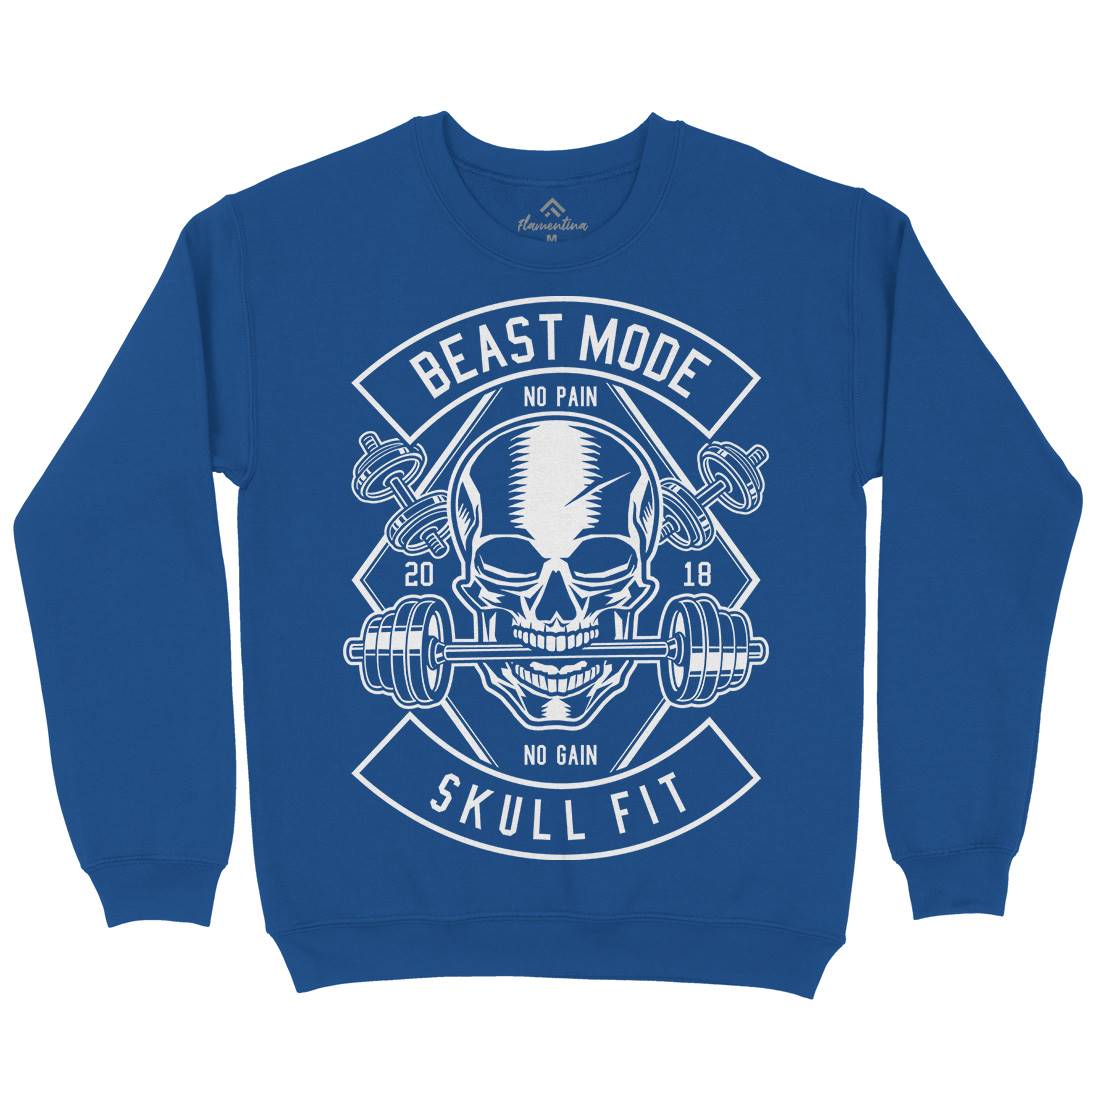 Skull Fit Mens Crew Neck Sweatshirt Gym B628